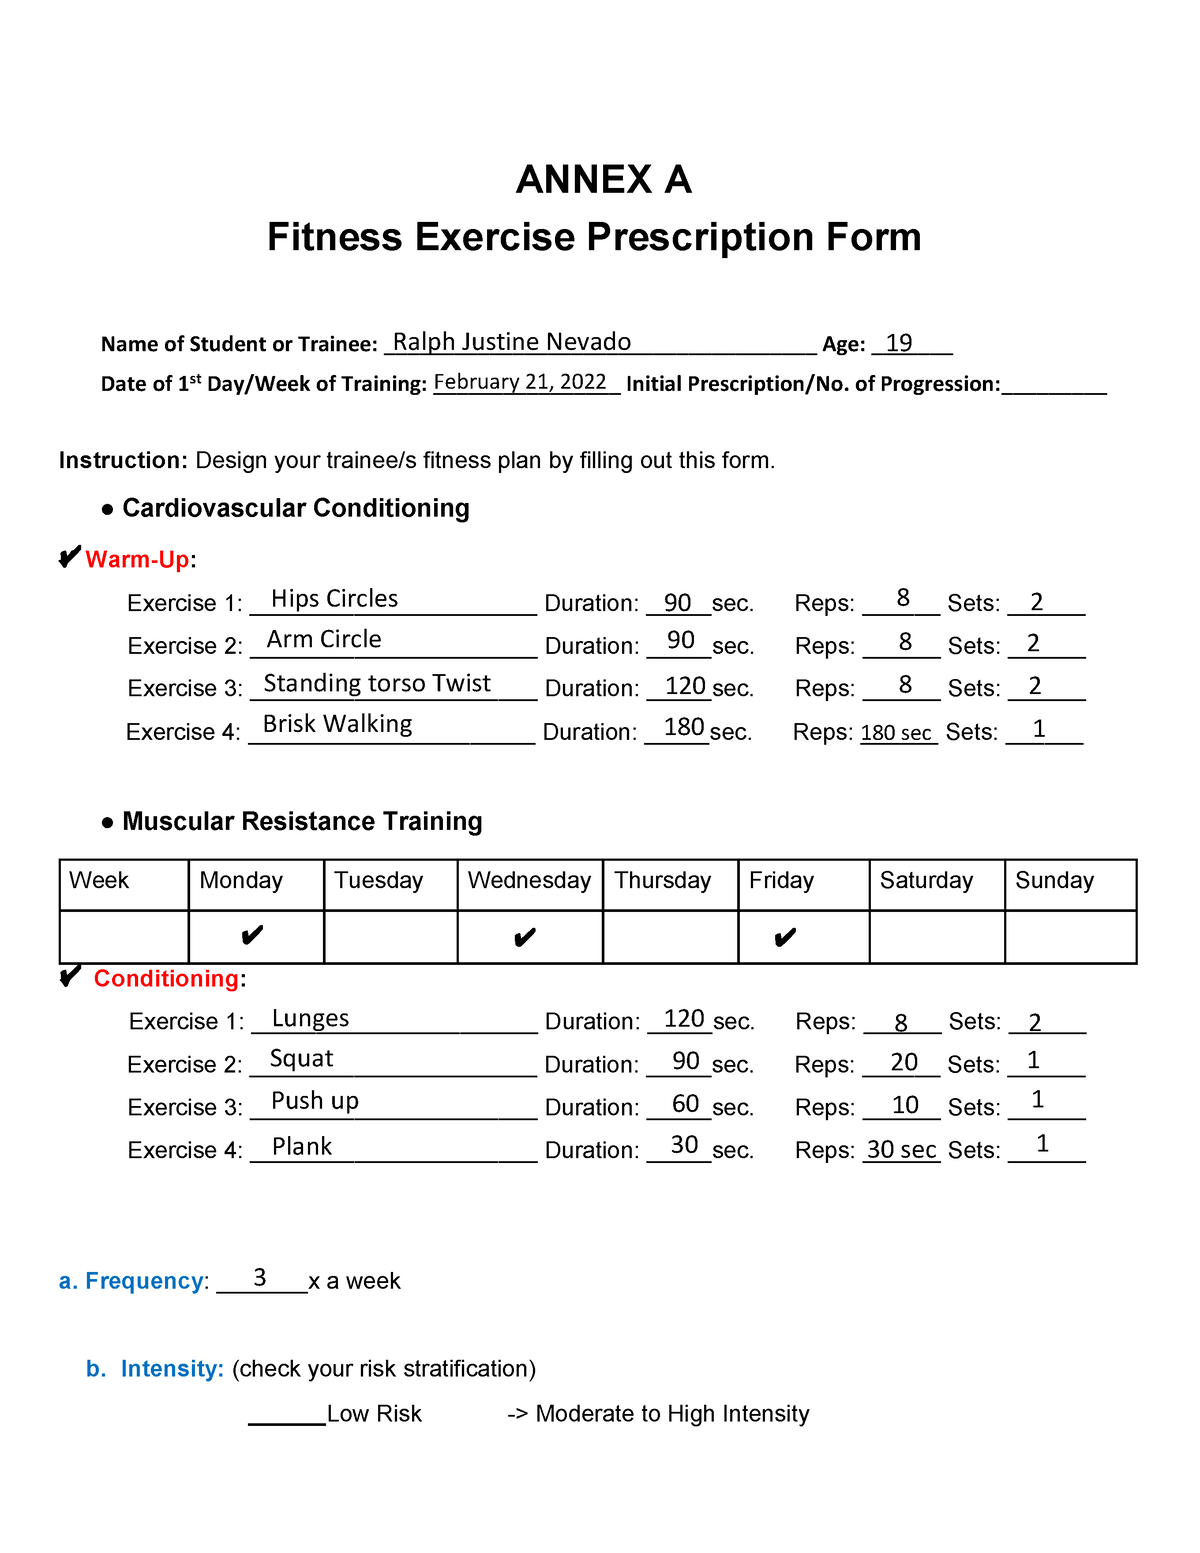 AnnexA PED028 Fitness Program ANNEX A Fitness Exercise